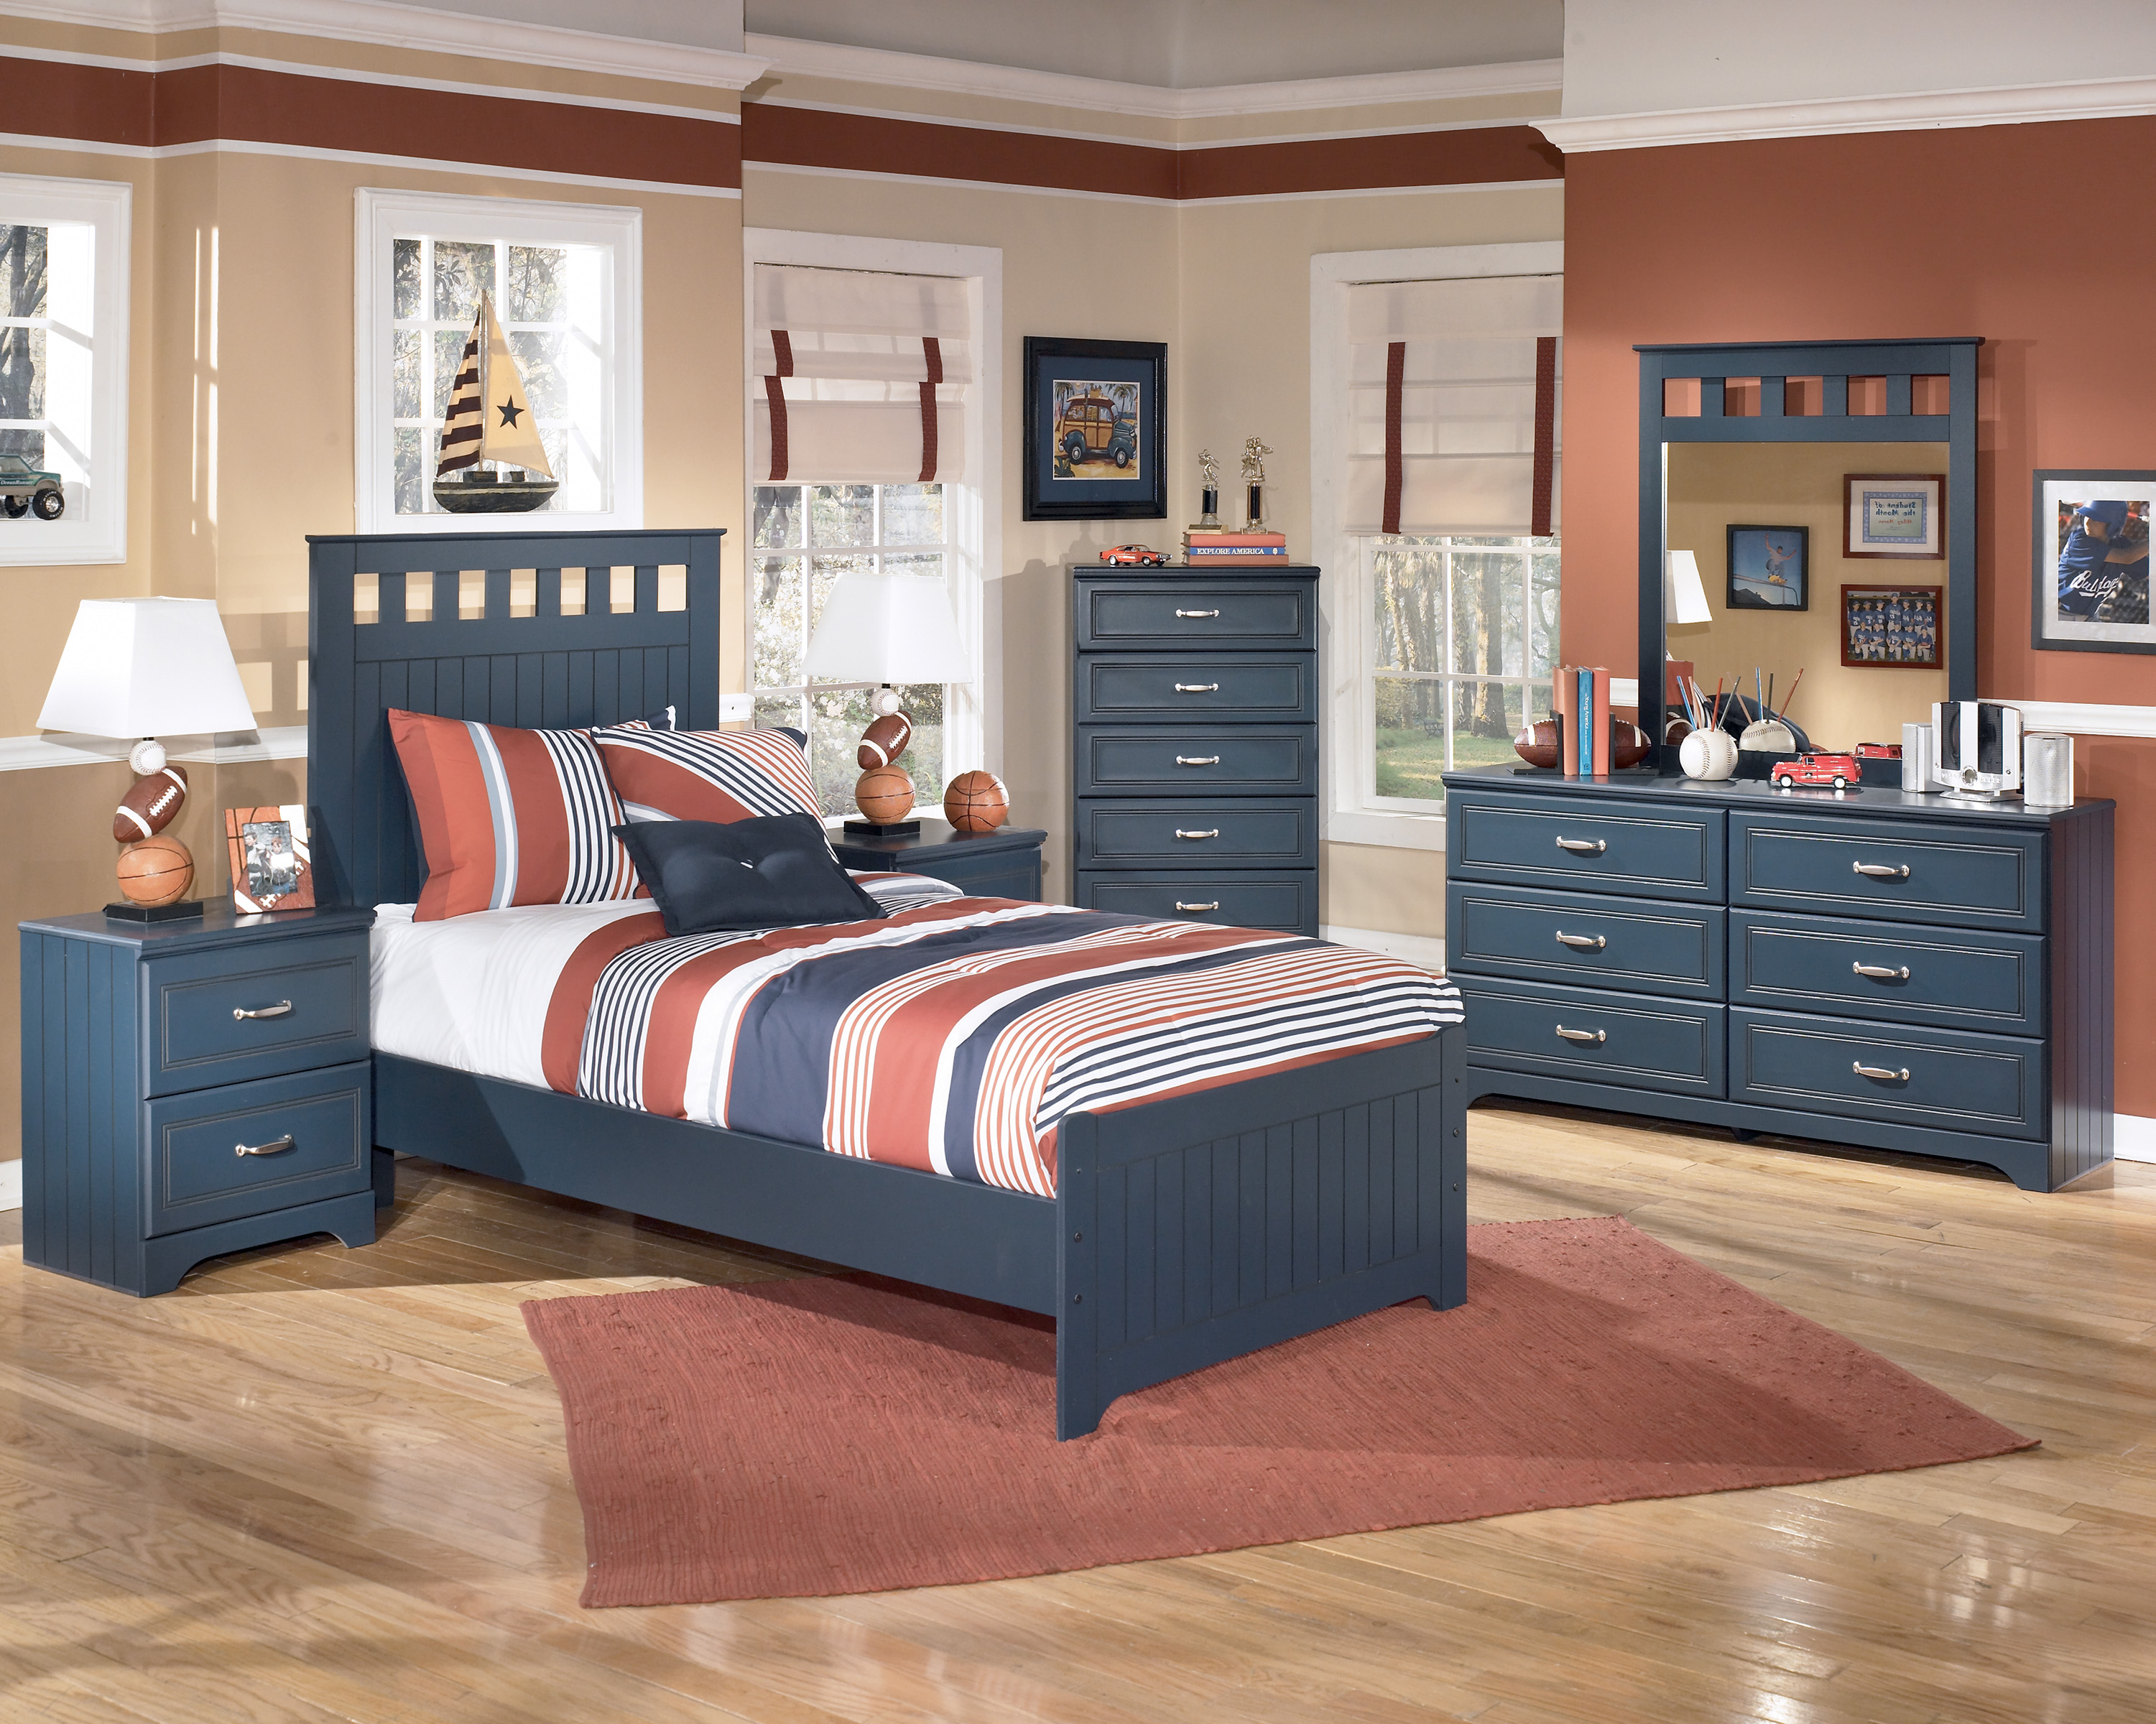 Solid wood bedroom furniture for kids - 20 tips for best quality kid bedroom furniture buying